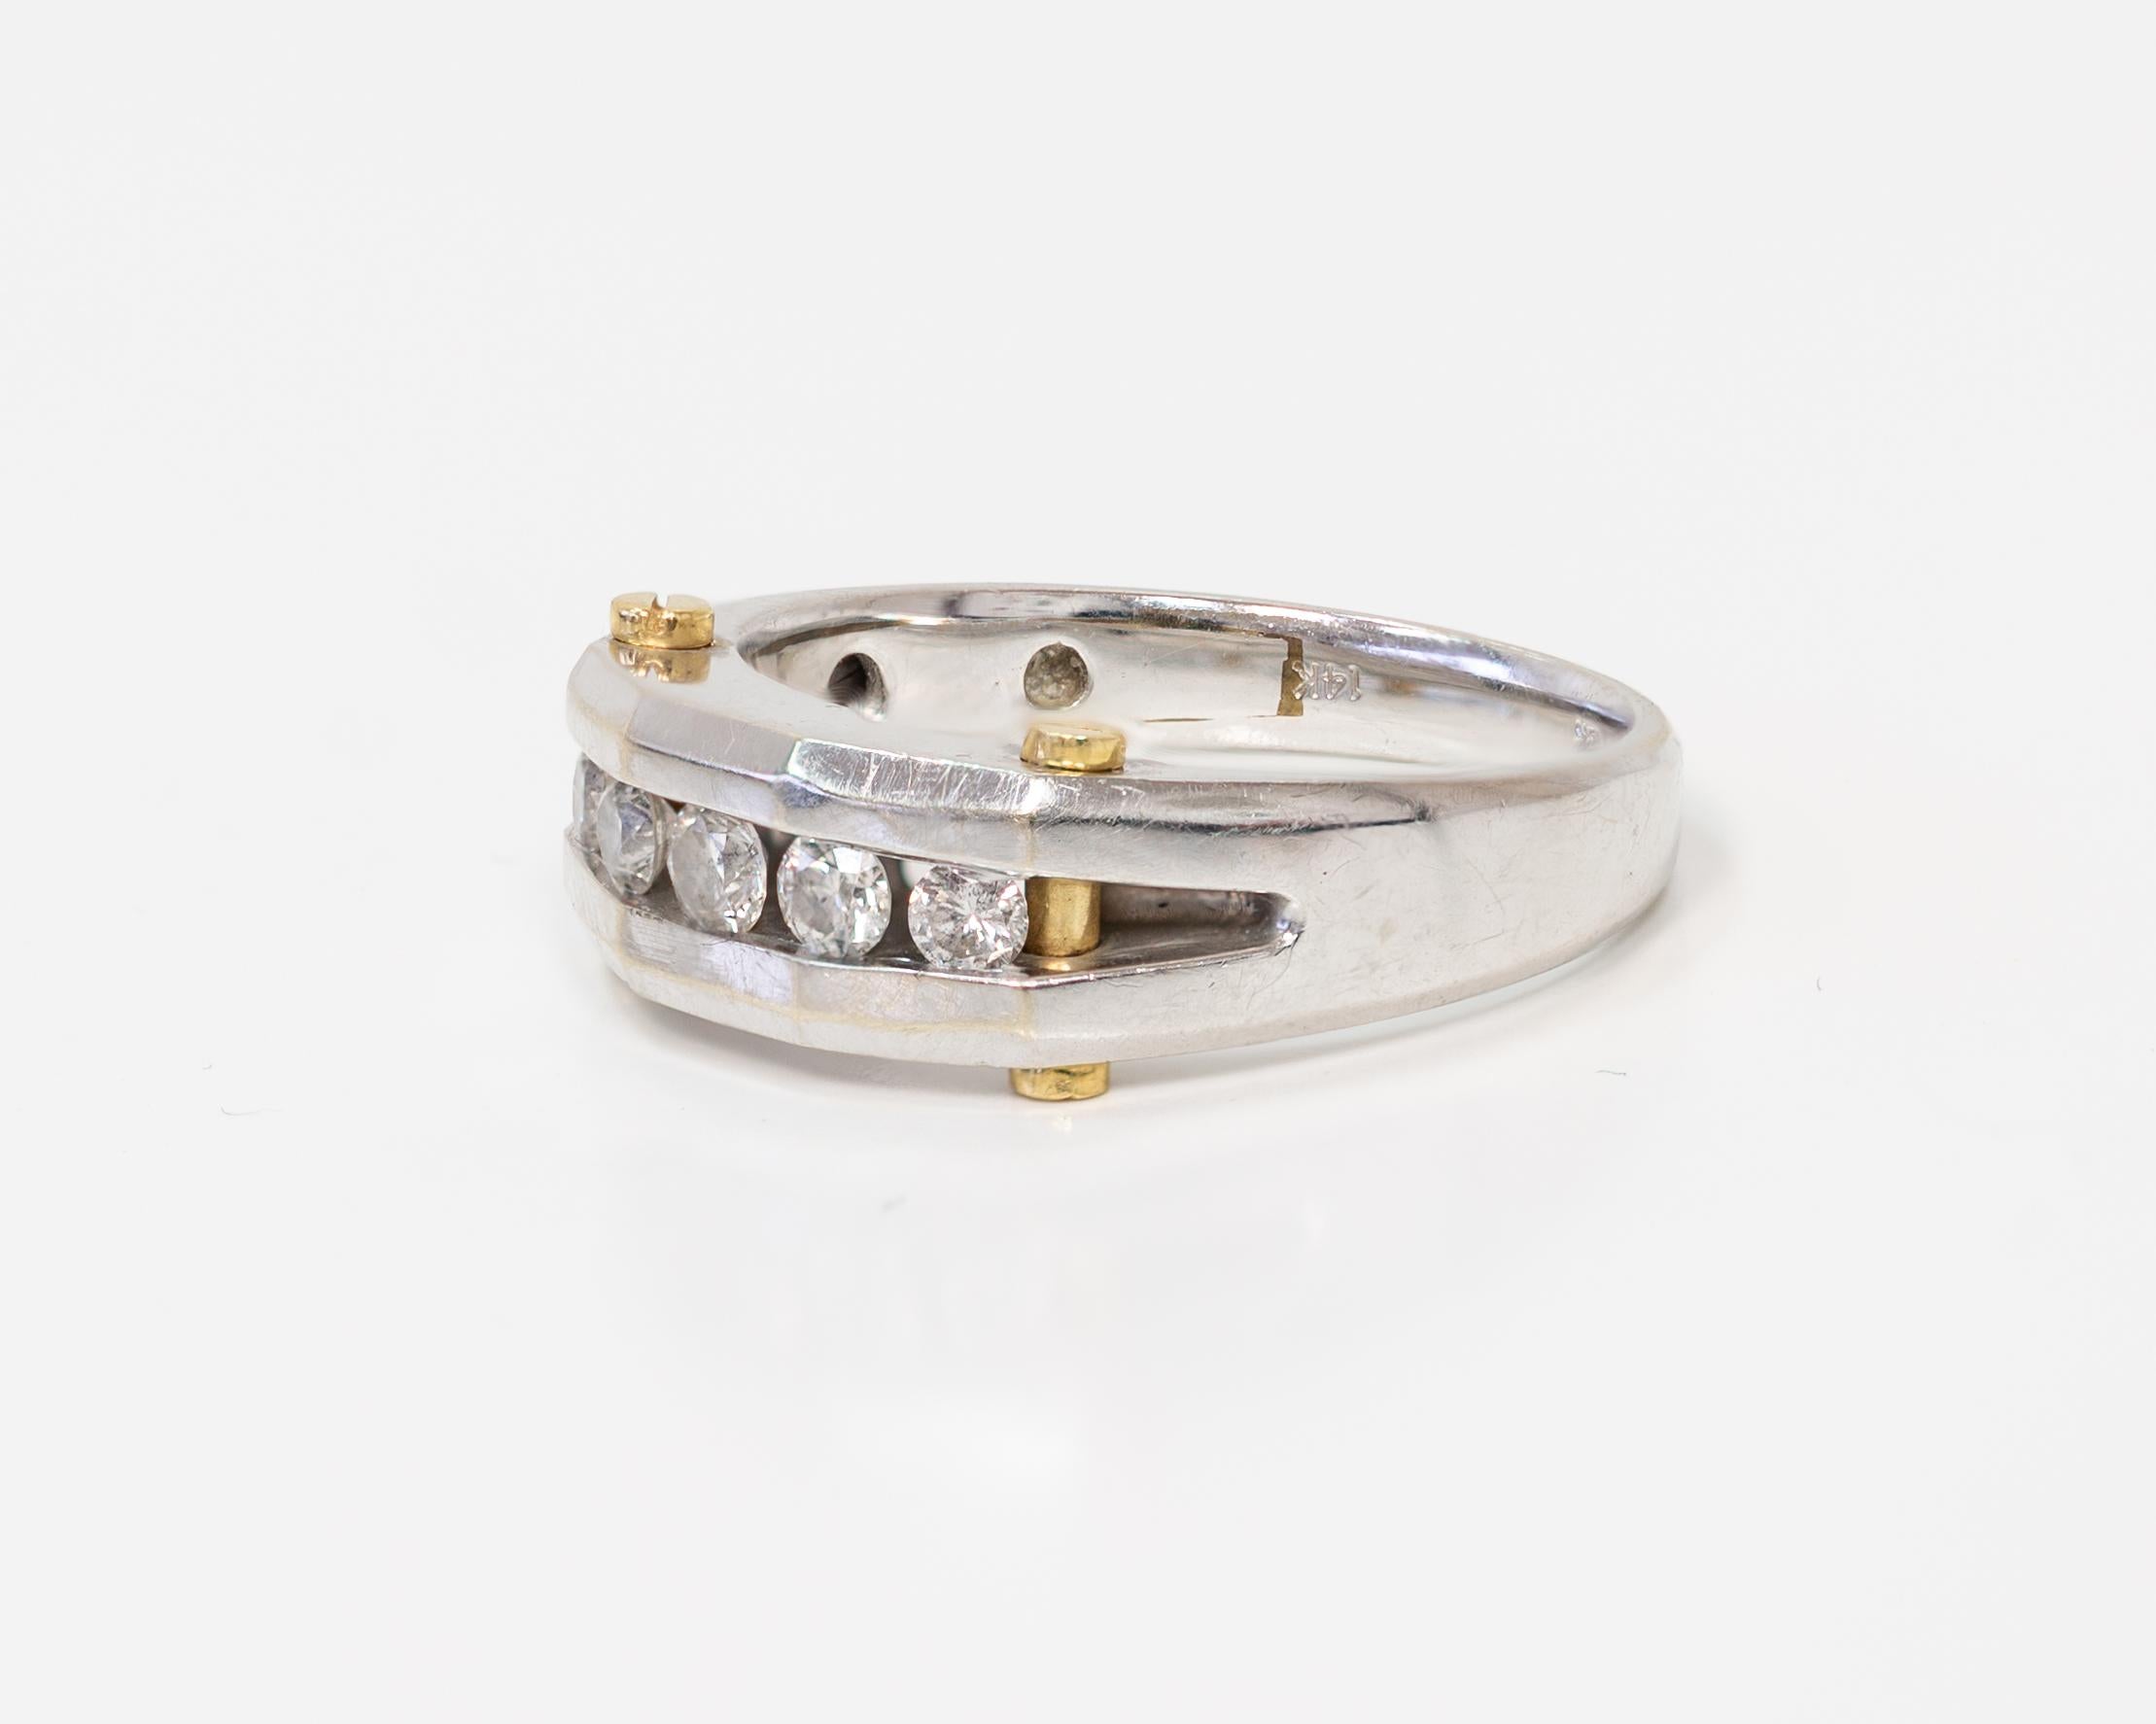 Round Cut 14K White Gold Men's Ring / Wedding Band with Diamonds & 18K Yellow Gold Details